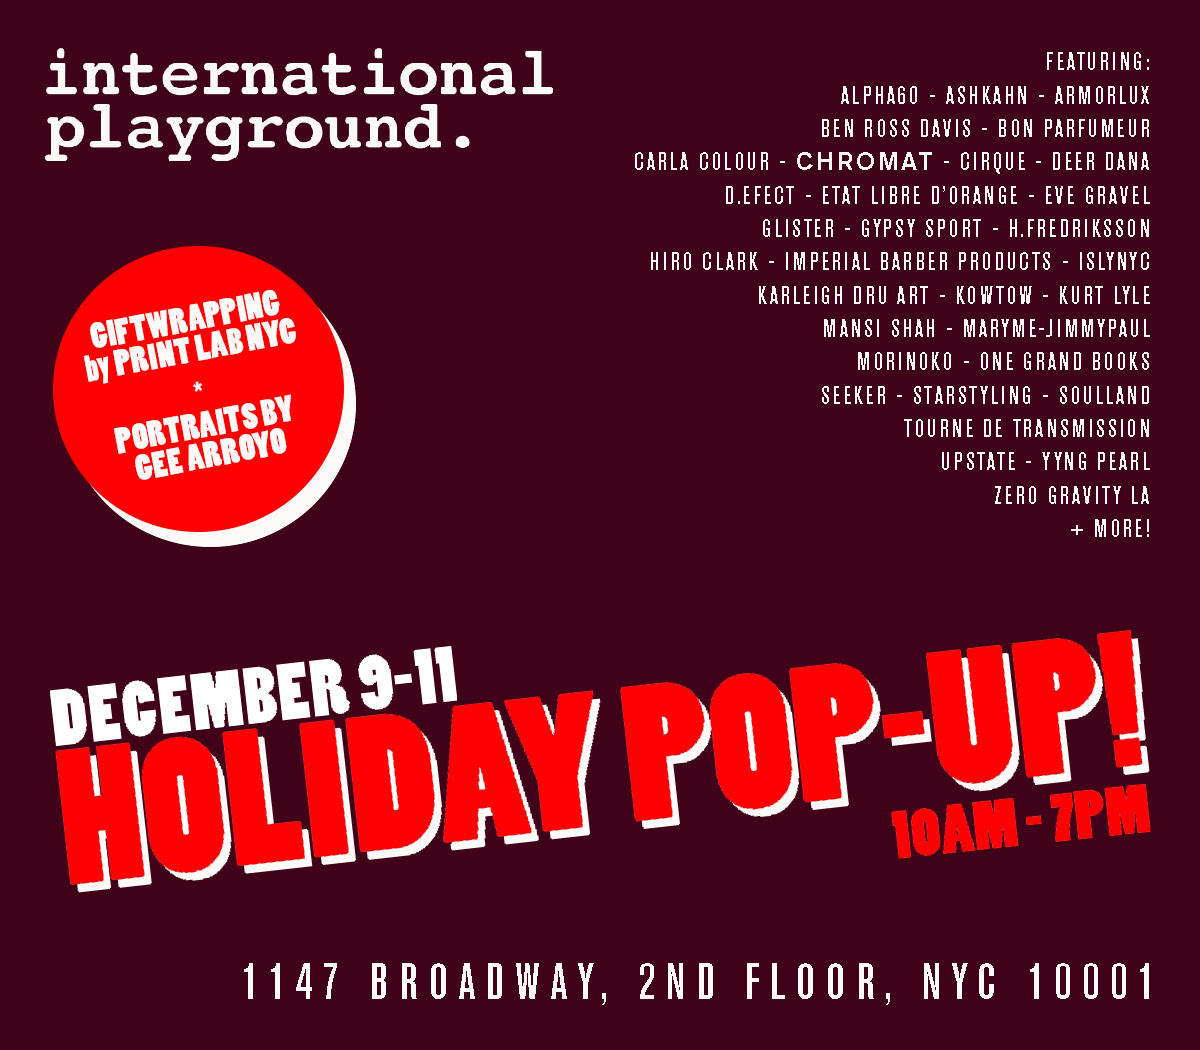 Holiday Pop Up @ International Playground Opens Tomorrow >